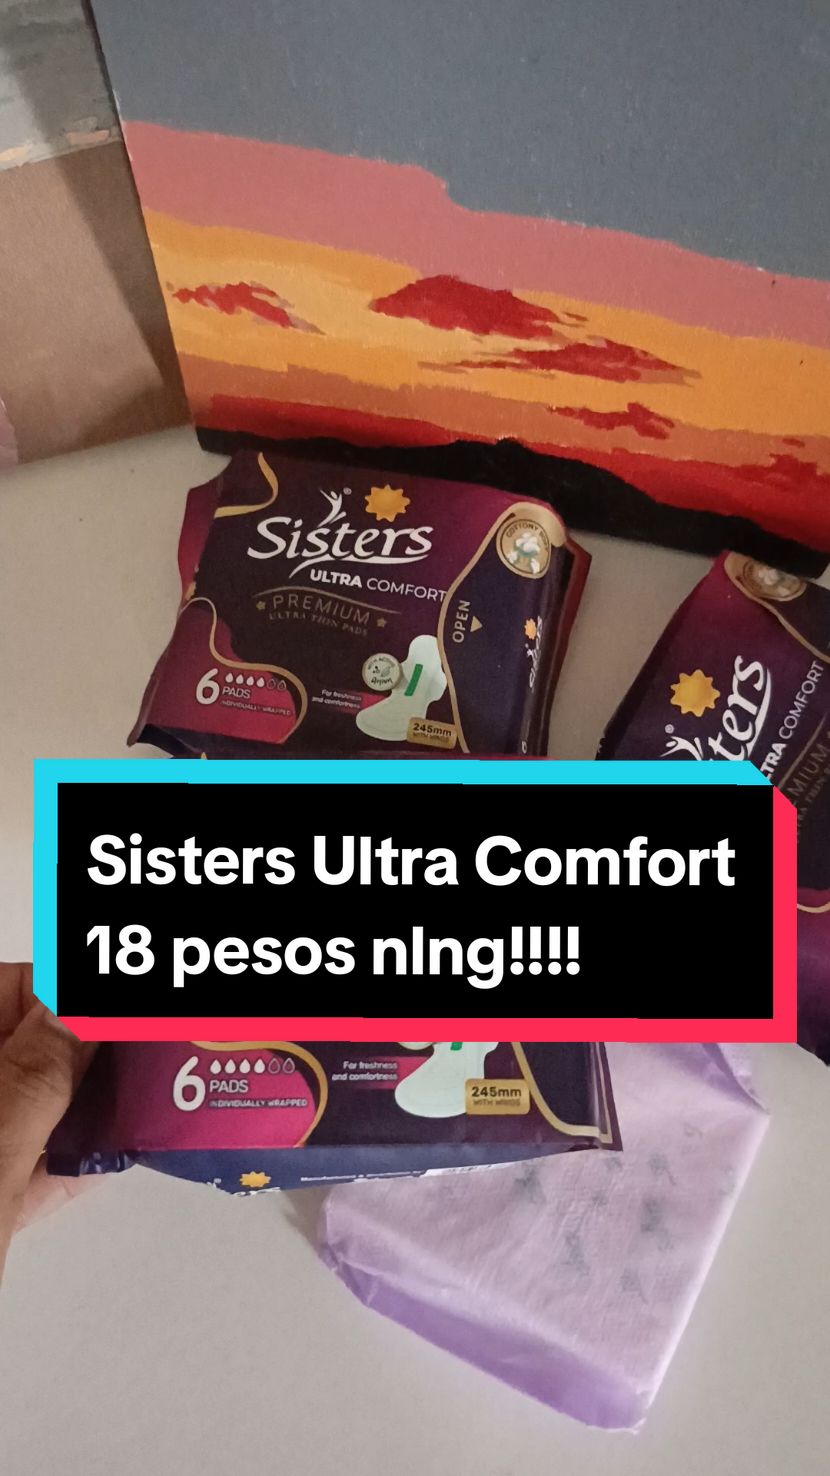 guysss 18 pesos nlng syaaaa🥹checkout na kayoooo🤩🤩habang naka saleeee hoarding na nmn too🥰🥰 #sisters #afilliate #fyppppppppppppppppppppppp #affilliate 